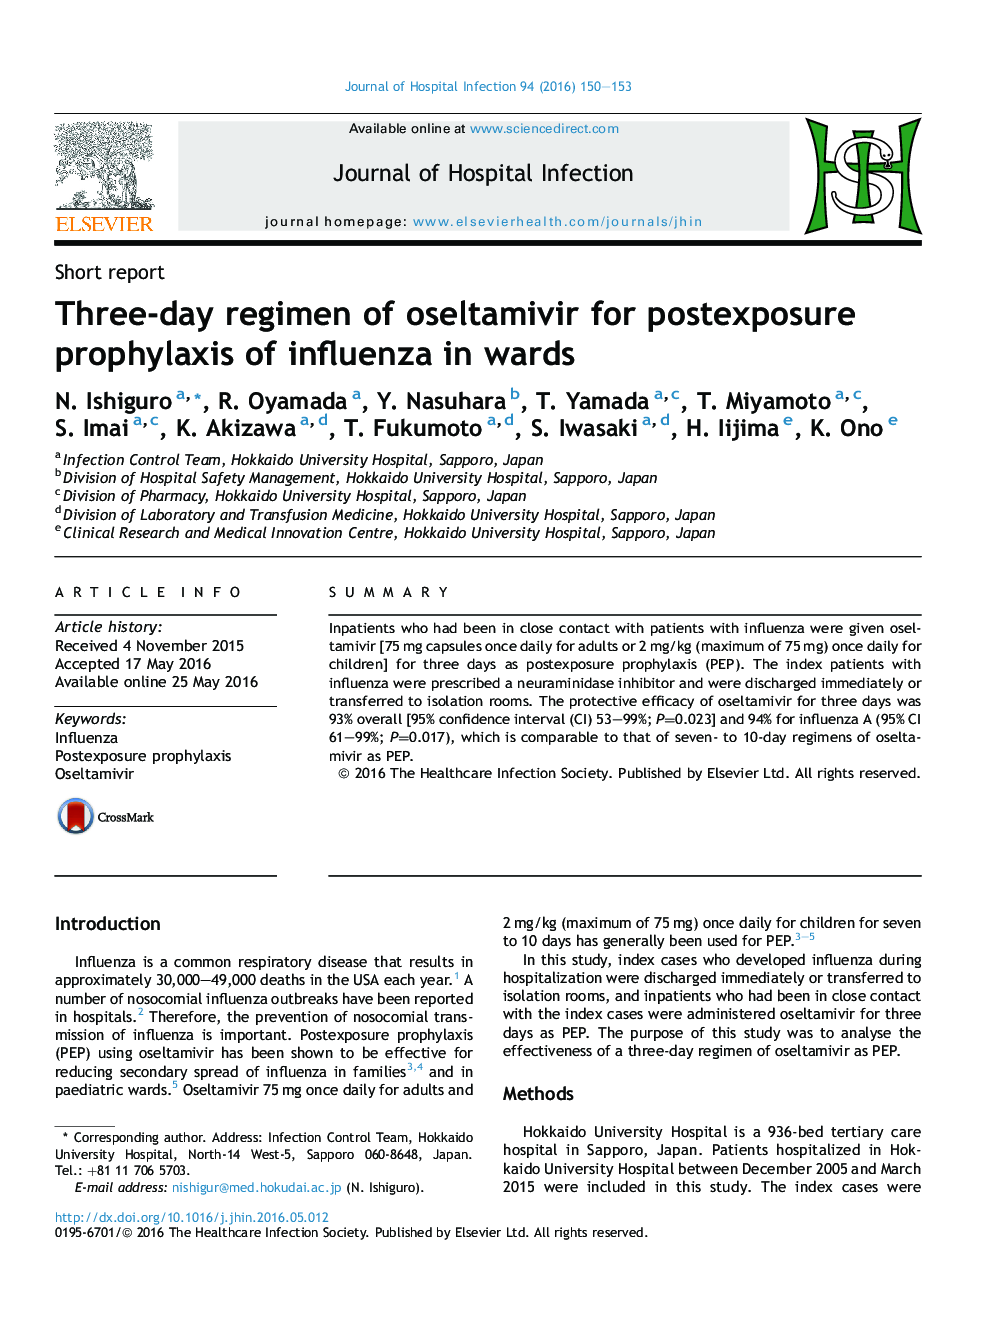 Three-day regimen of oseltamivir for postexposure prophylaxis of influenza in wards